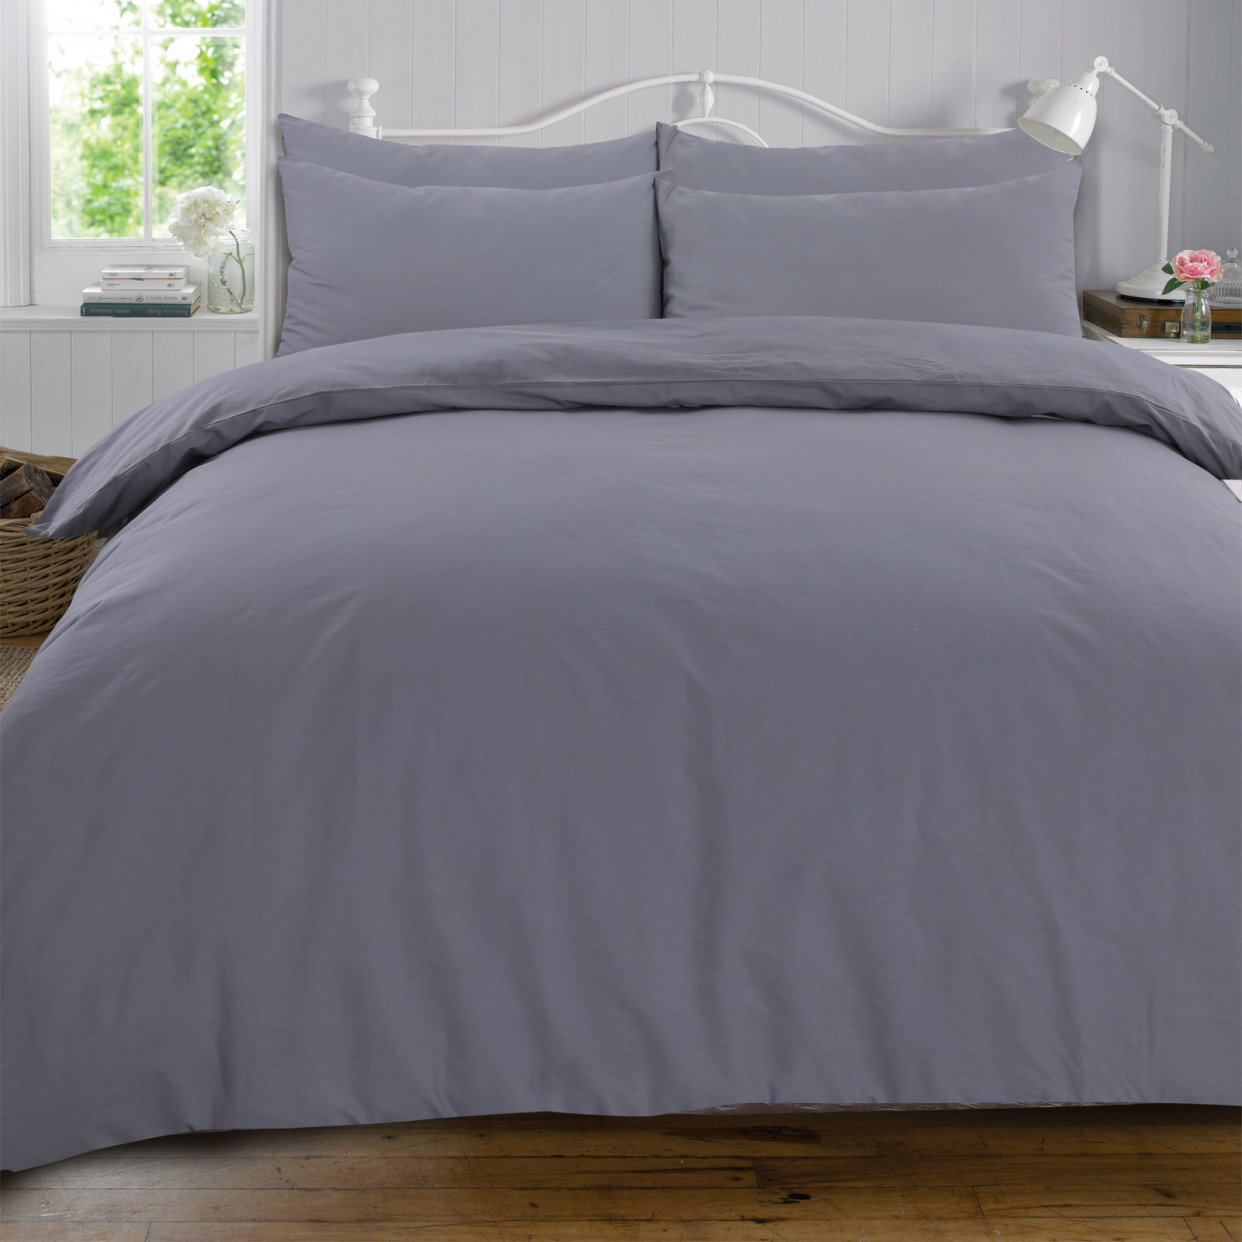 Highams Plain 100% Cotton Complete Duvet Cover Pillowcase Sheet Set, Grey - Super King>